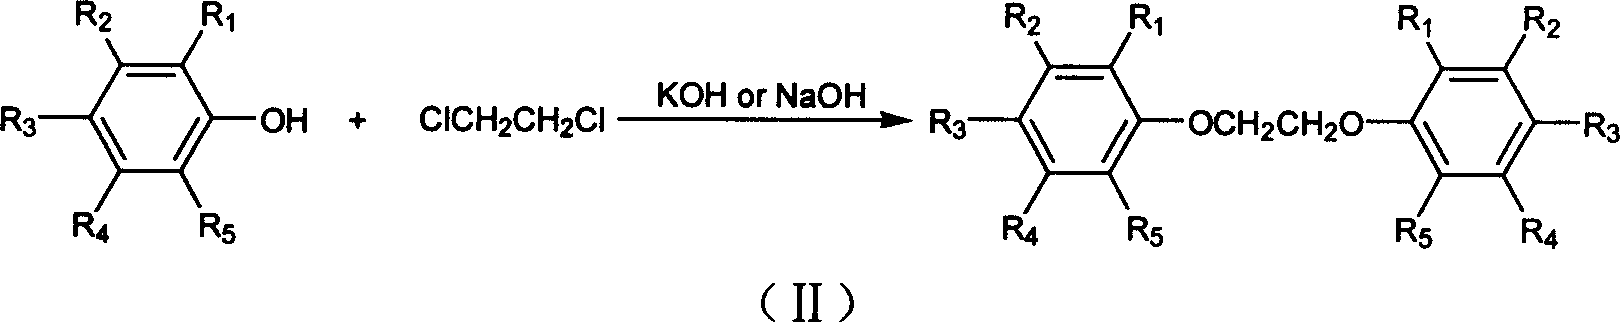 Ethylene glycol diarylether preparation method